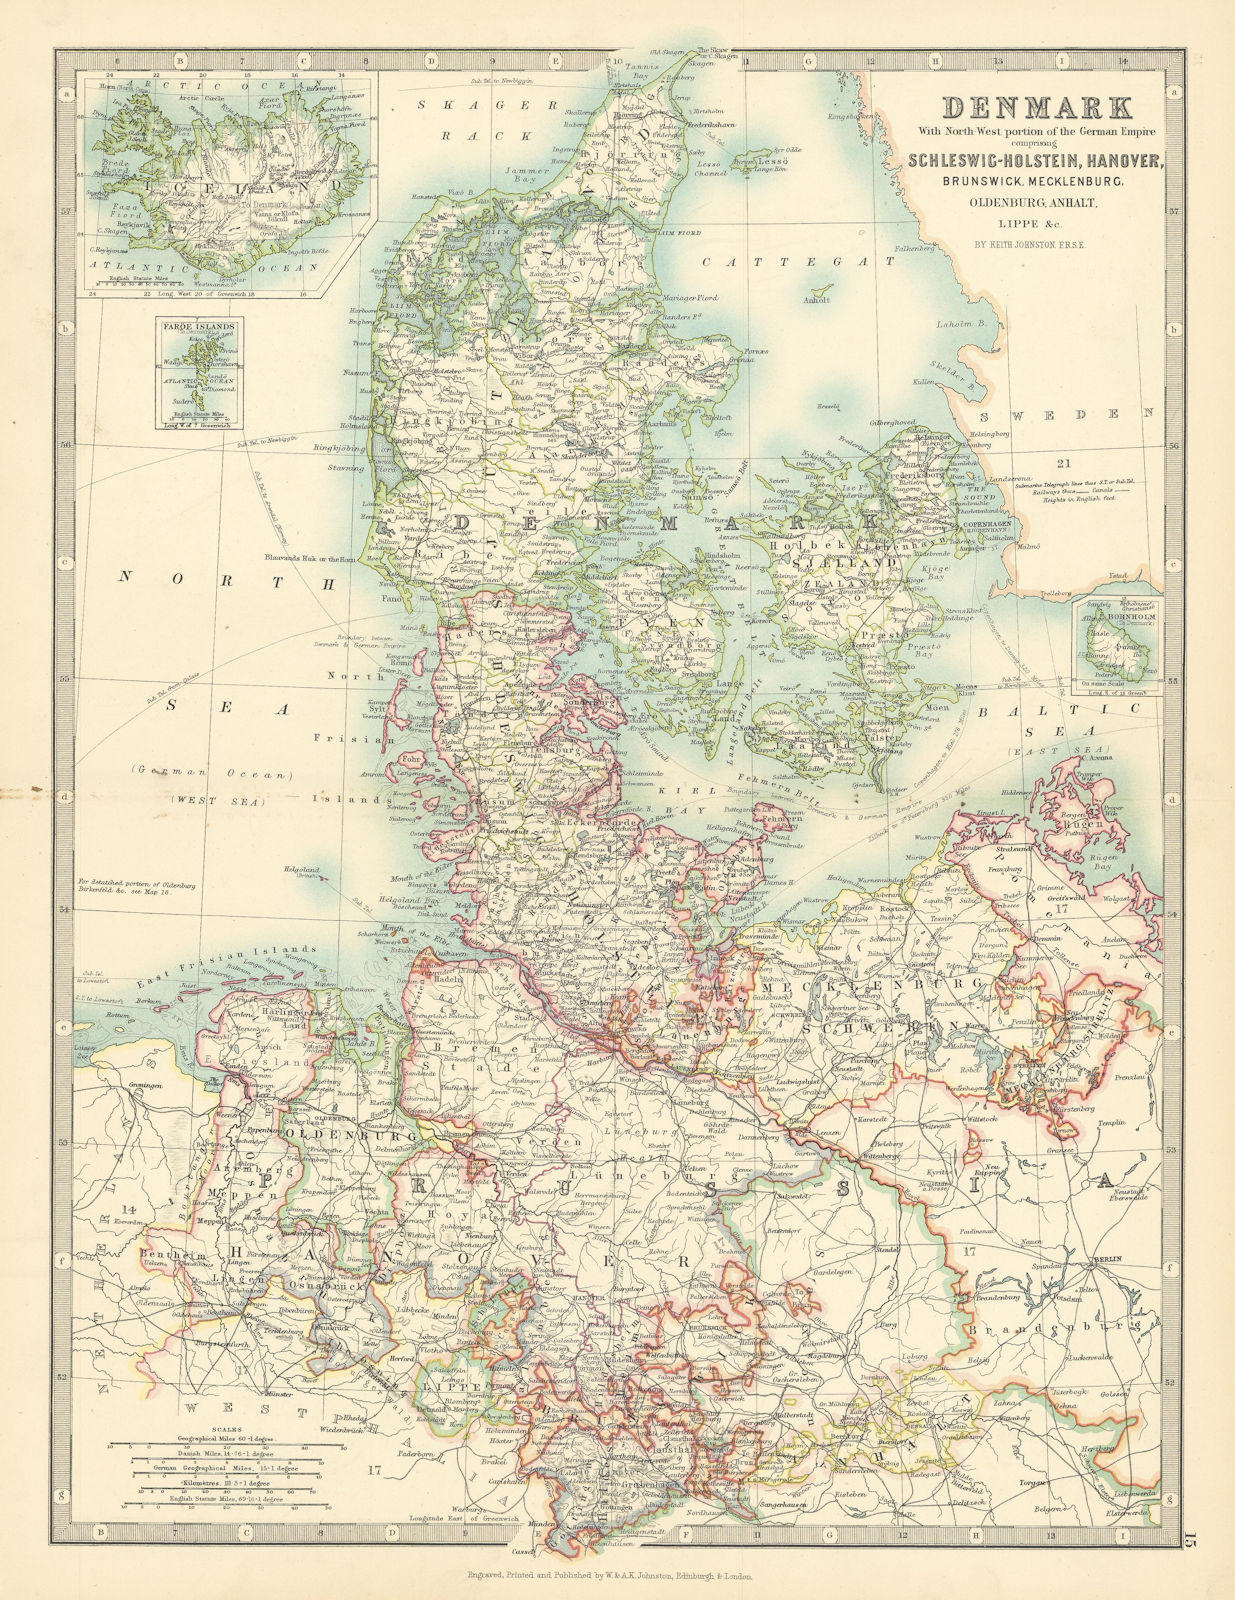 DENMARK/NORTHERN GERMANY Schleswig-Holstein Hanover Brunswick JOHNSTON 1897 map